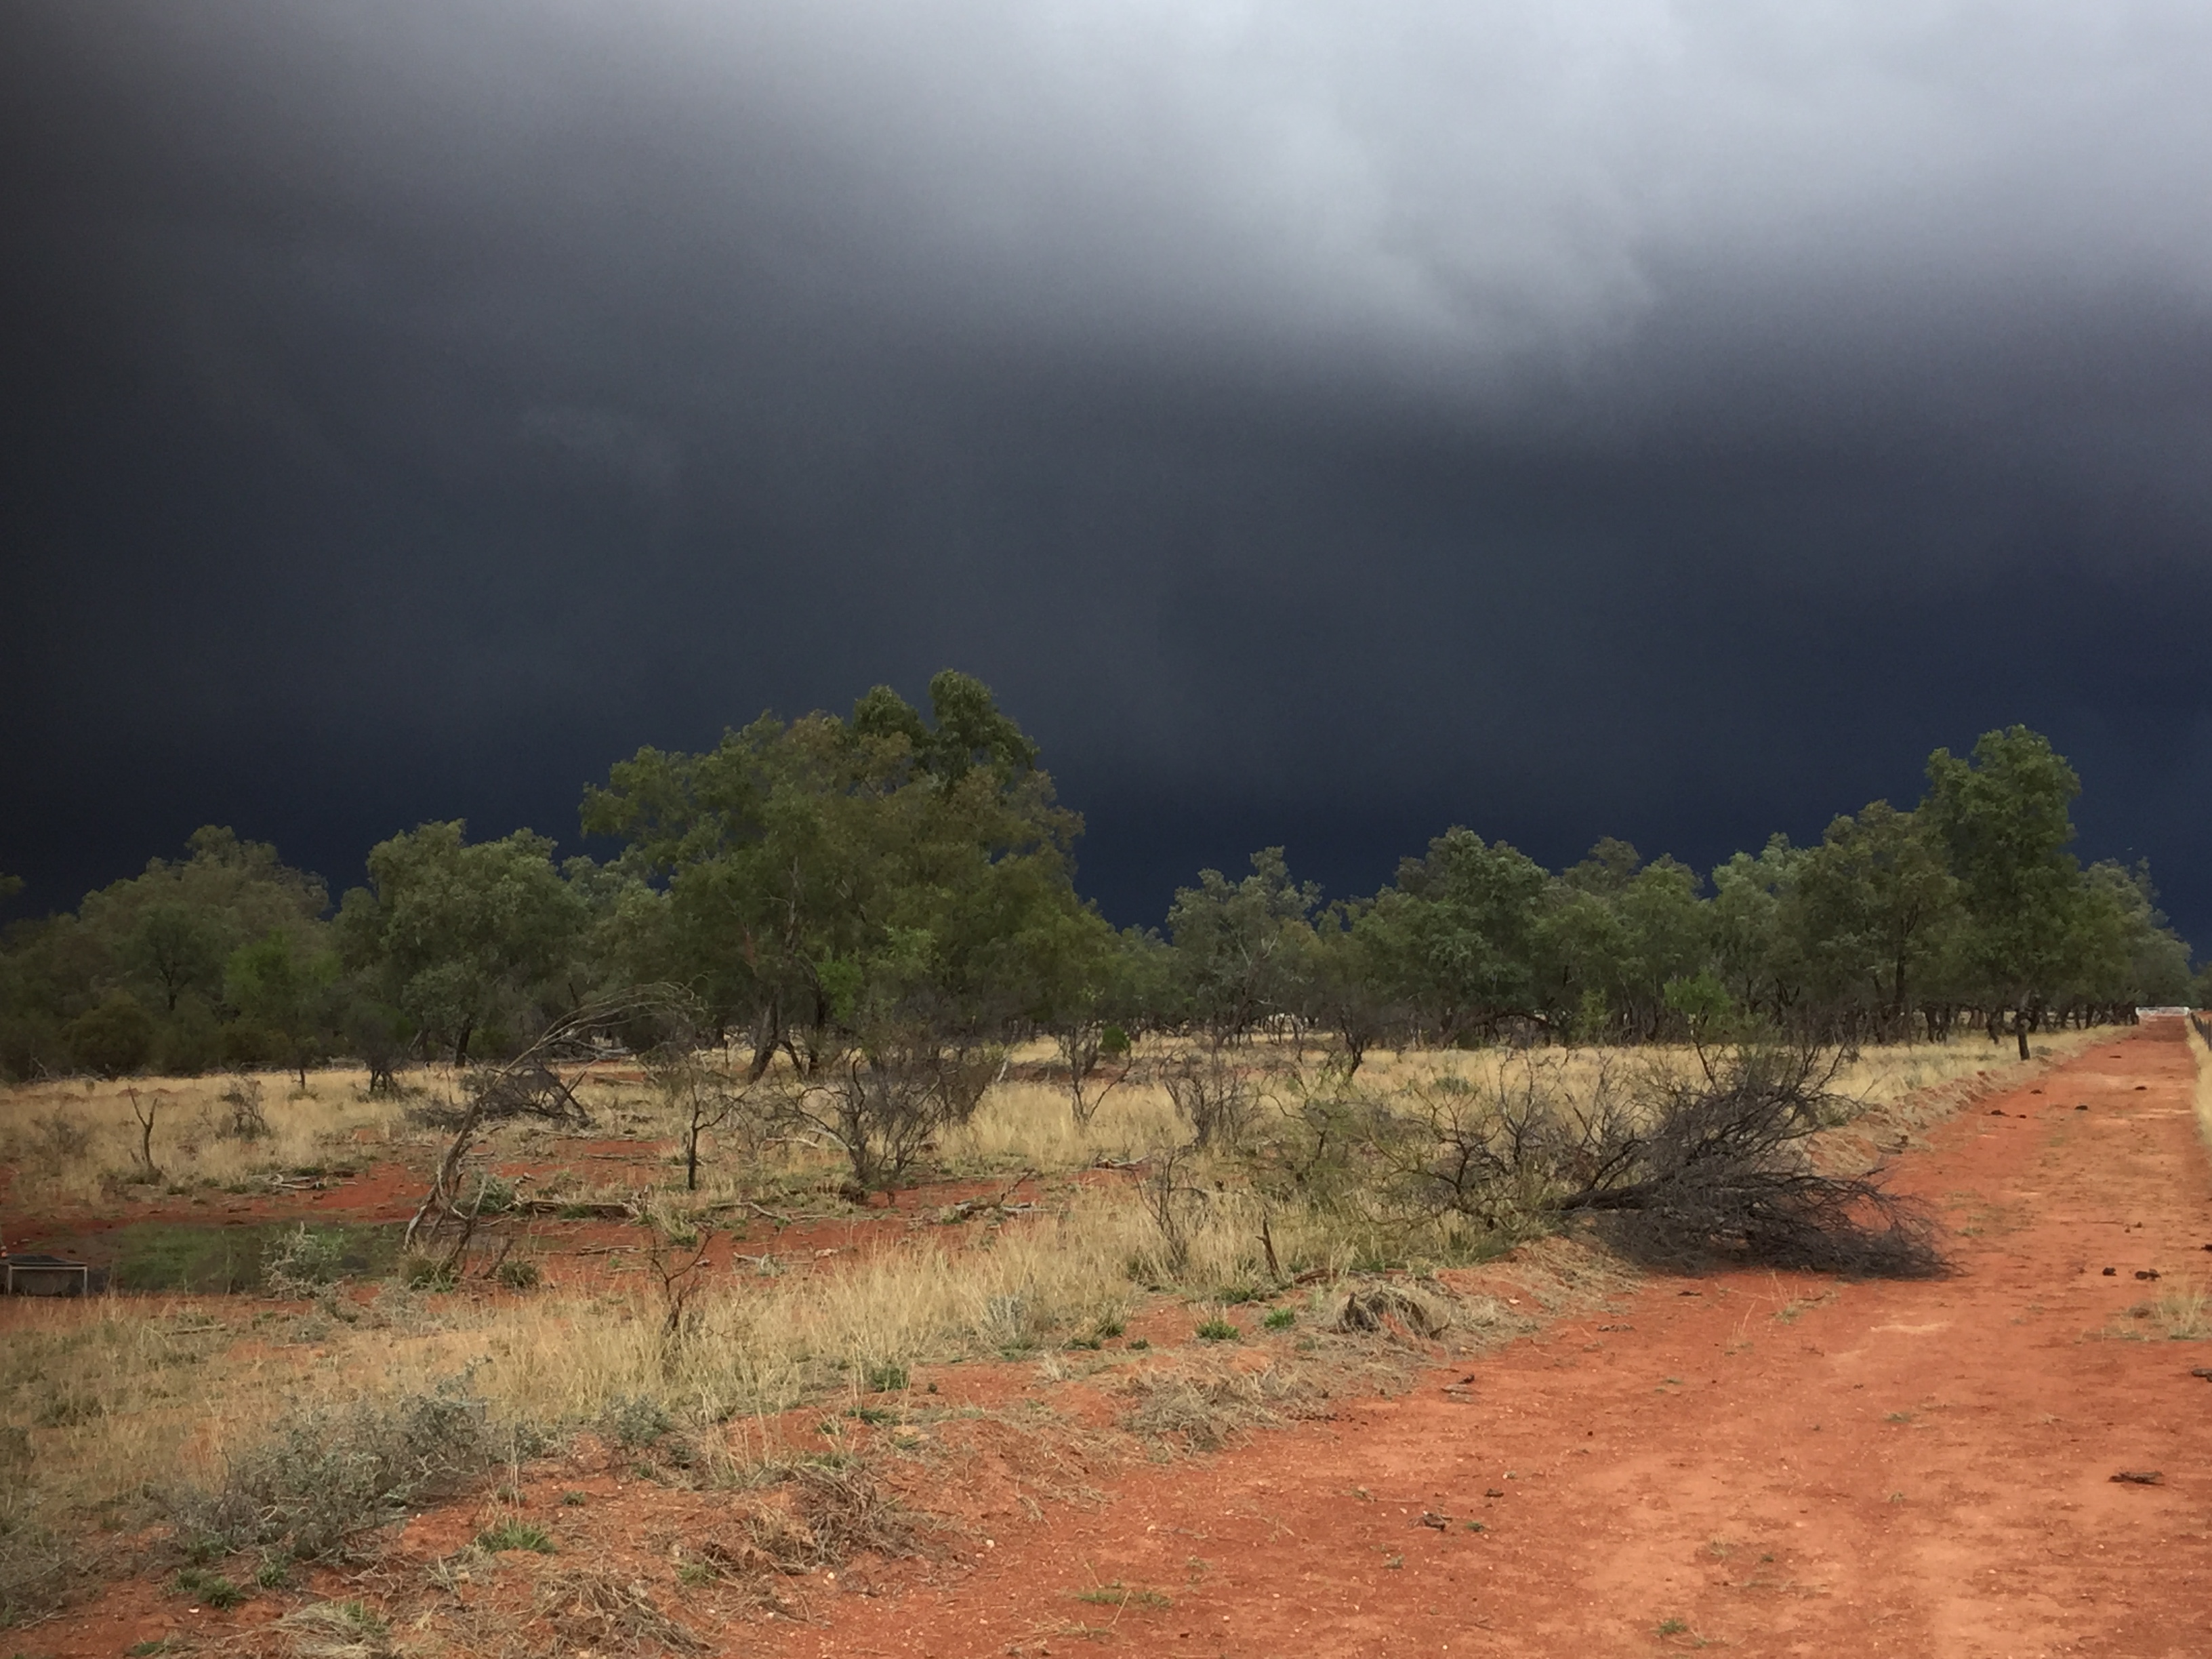 A storm approaching a dry grassland